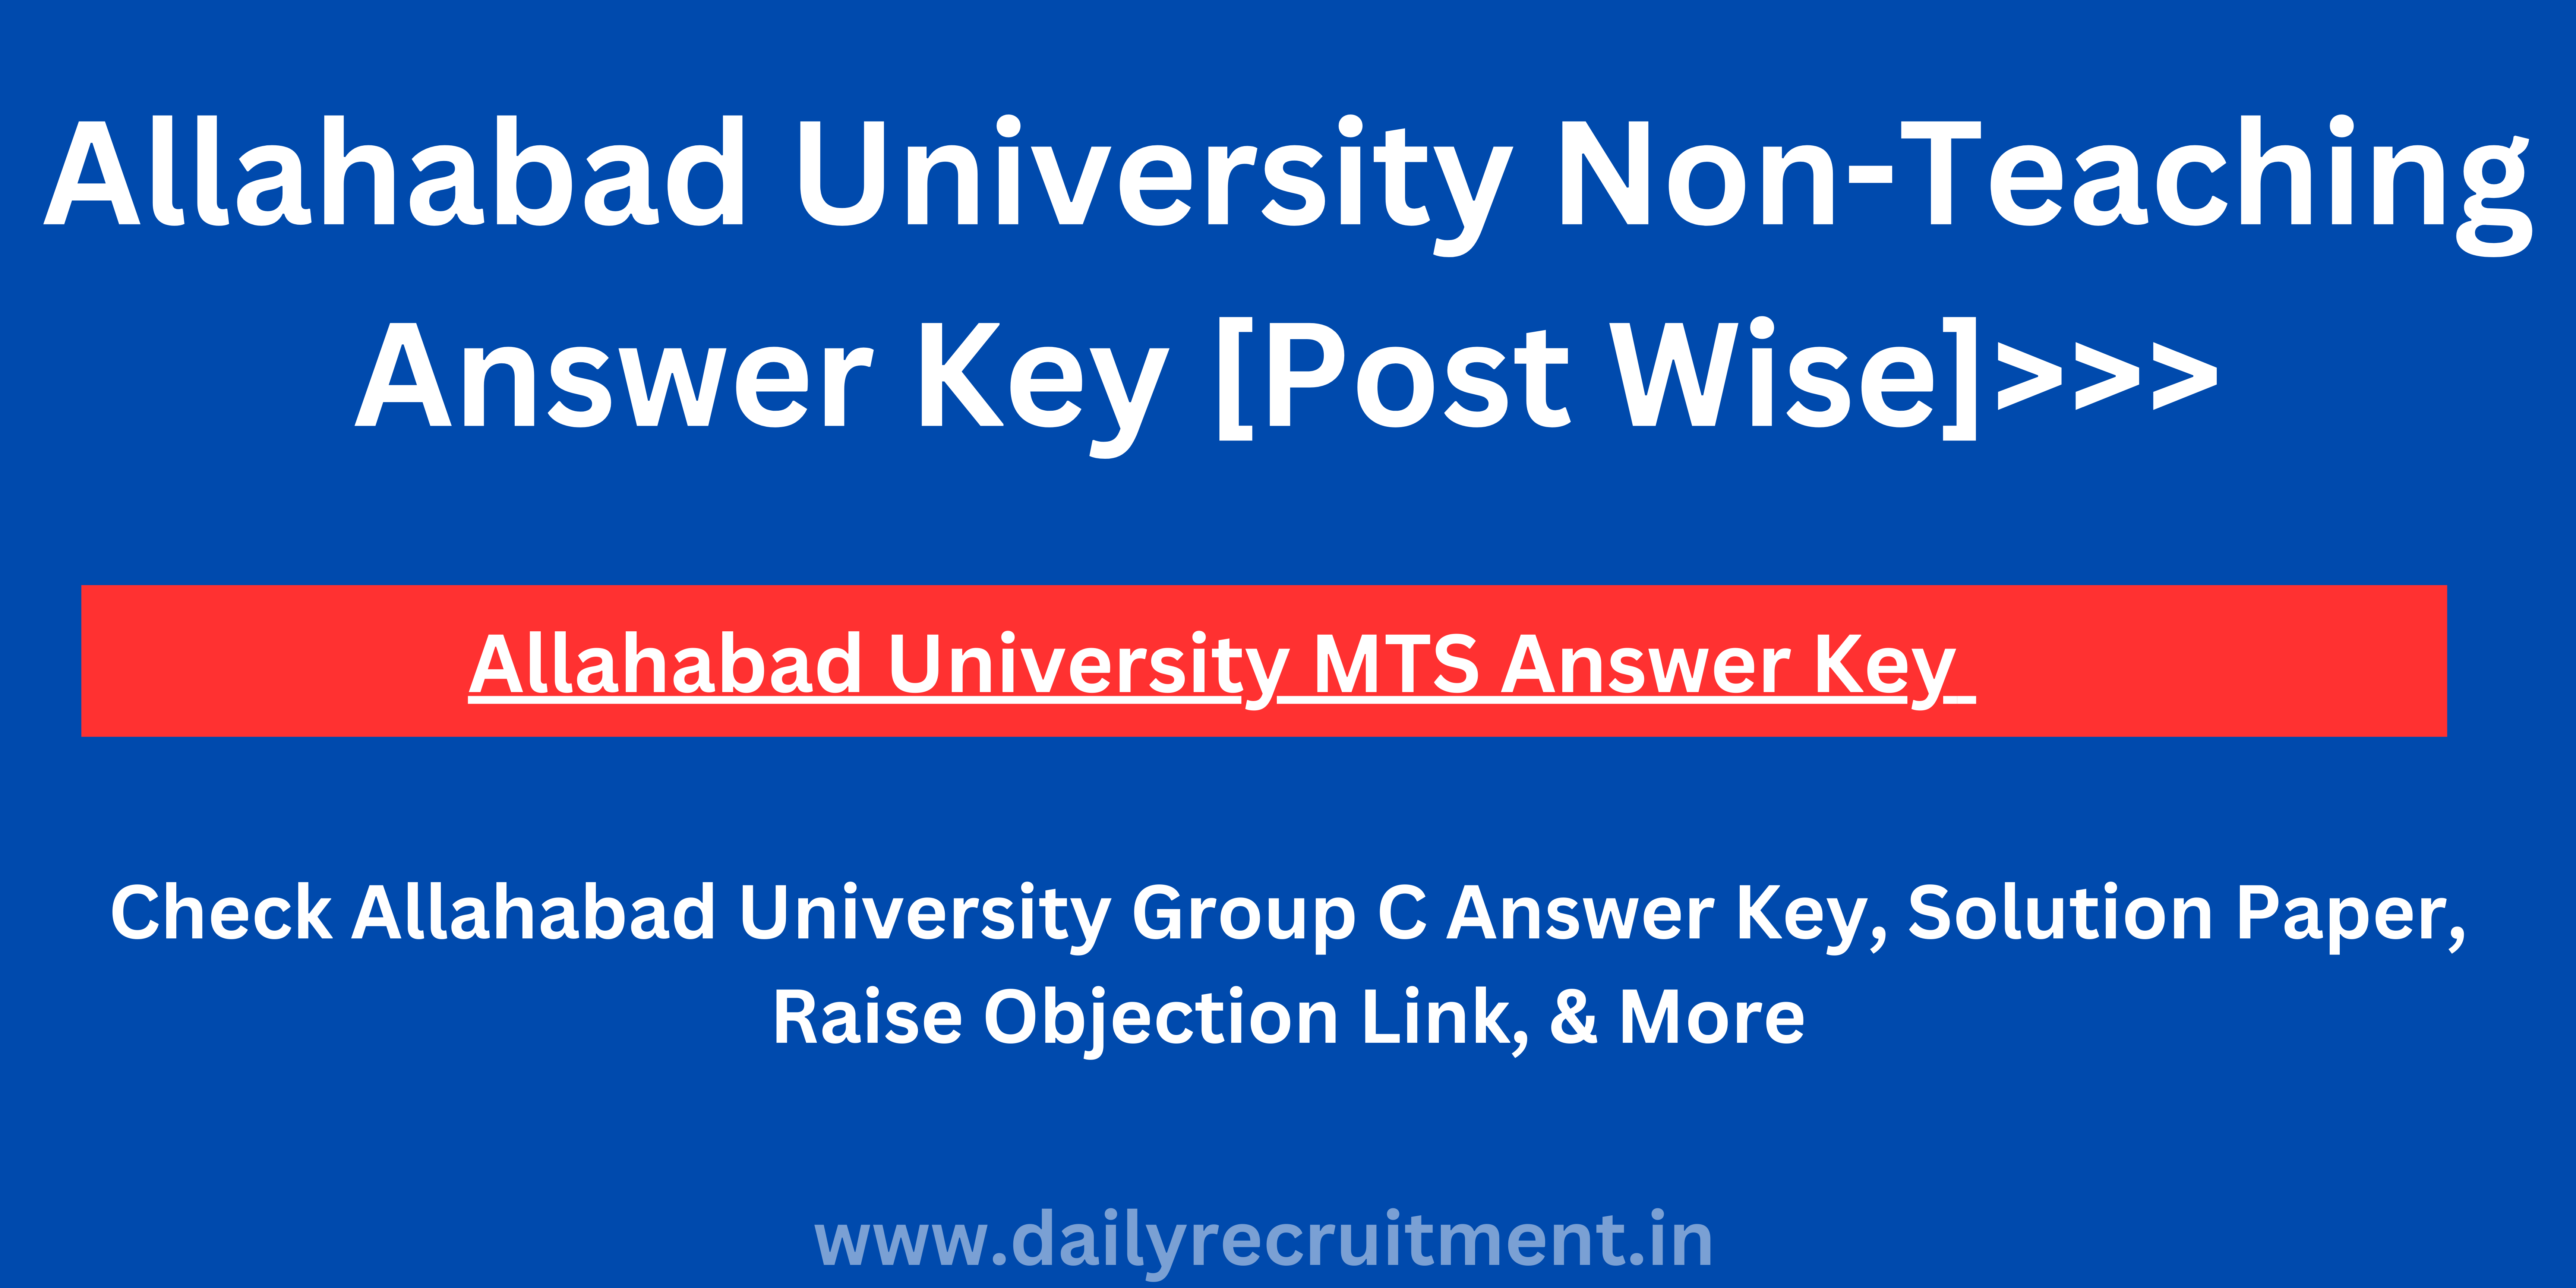 Allahabad University Non-Teaching Answer Key